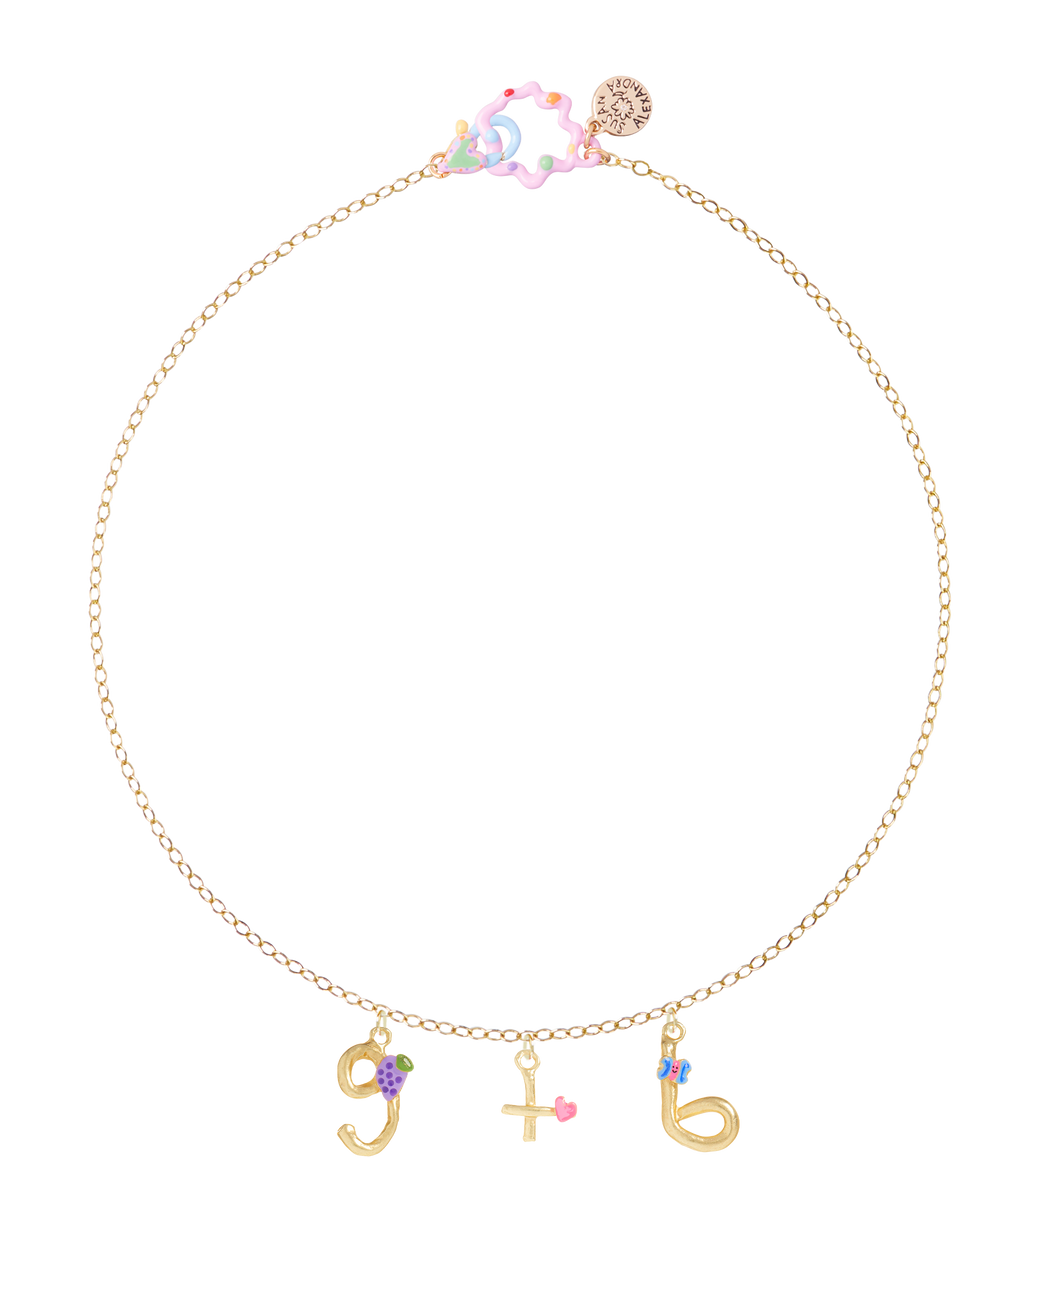 Allydrew Astronomy Jewelry Charm Pendant for Jewelry Making